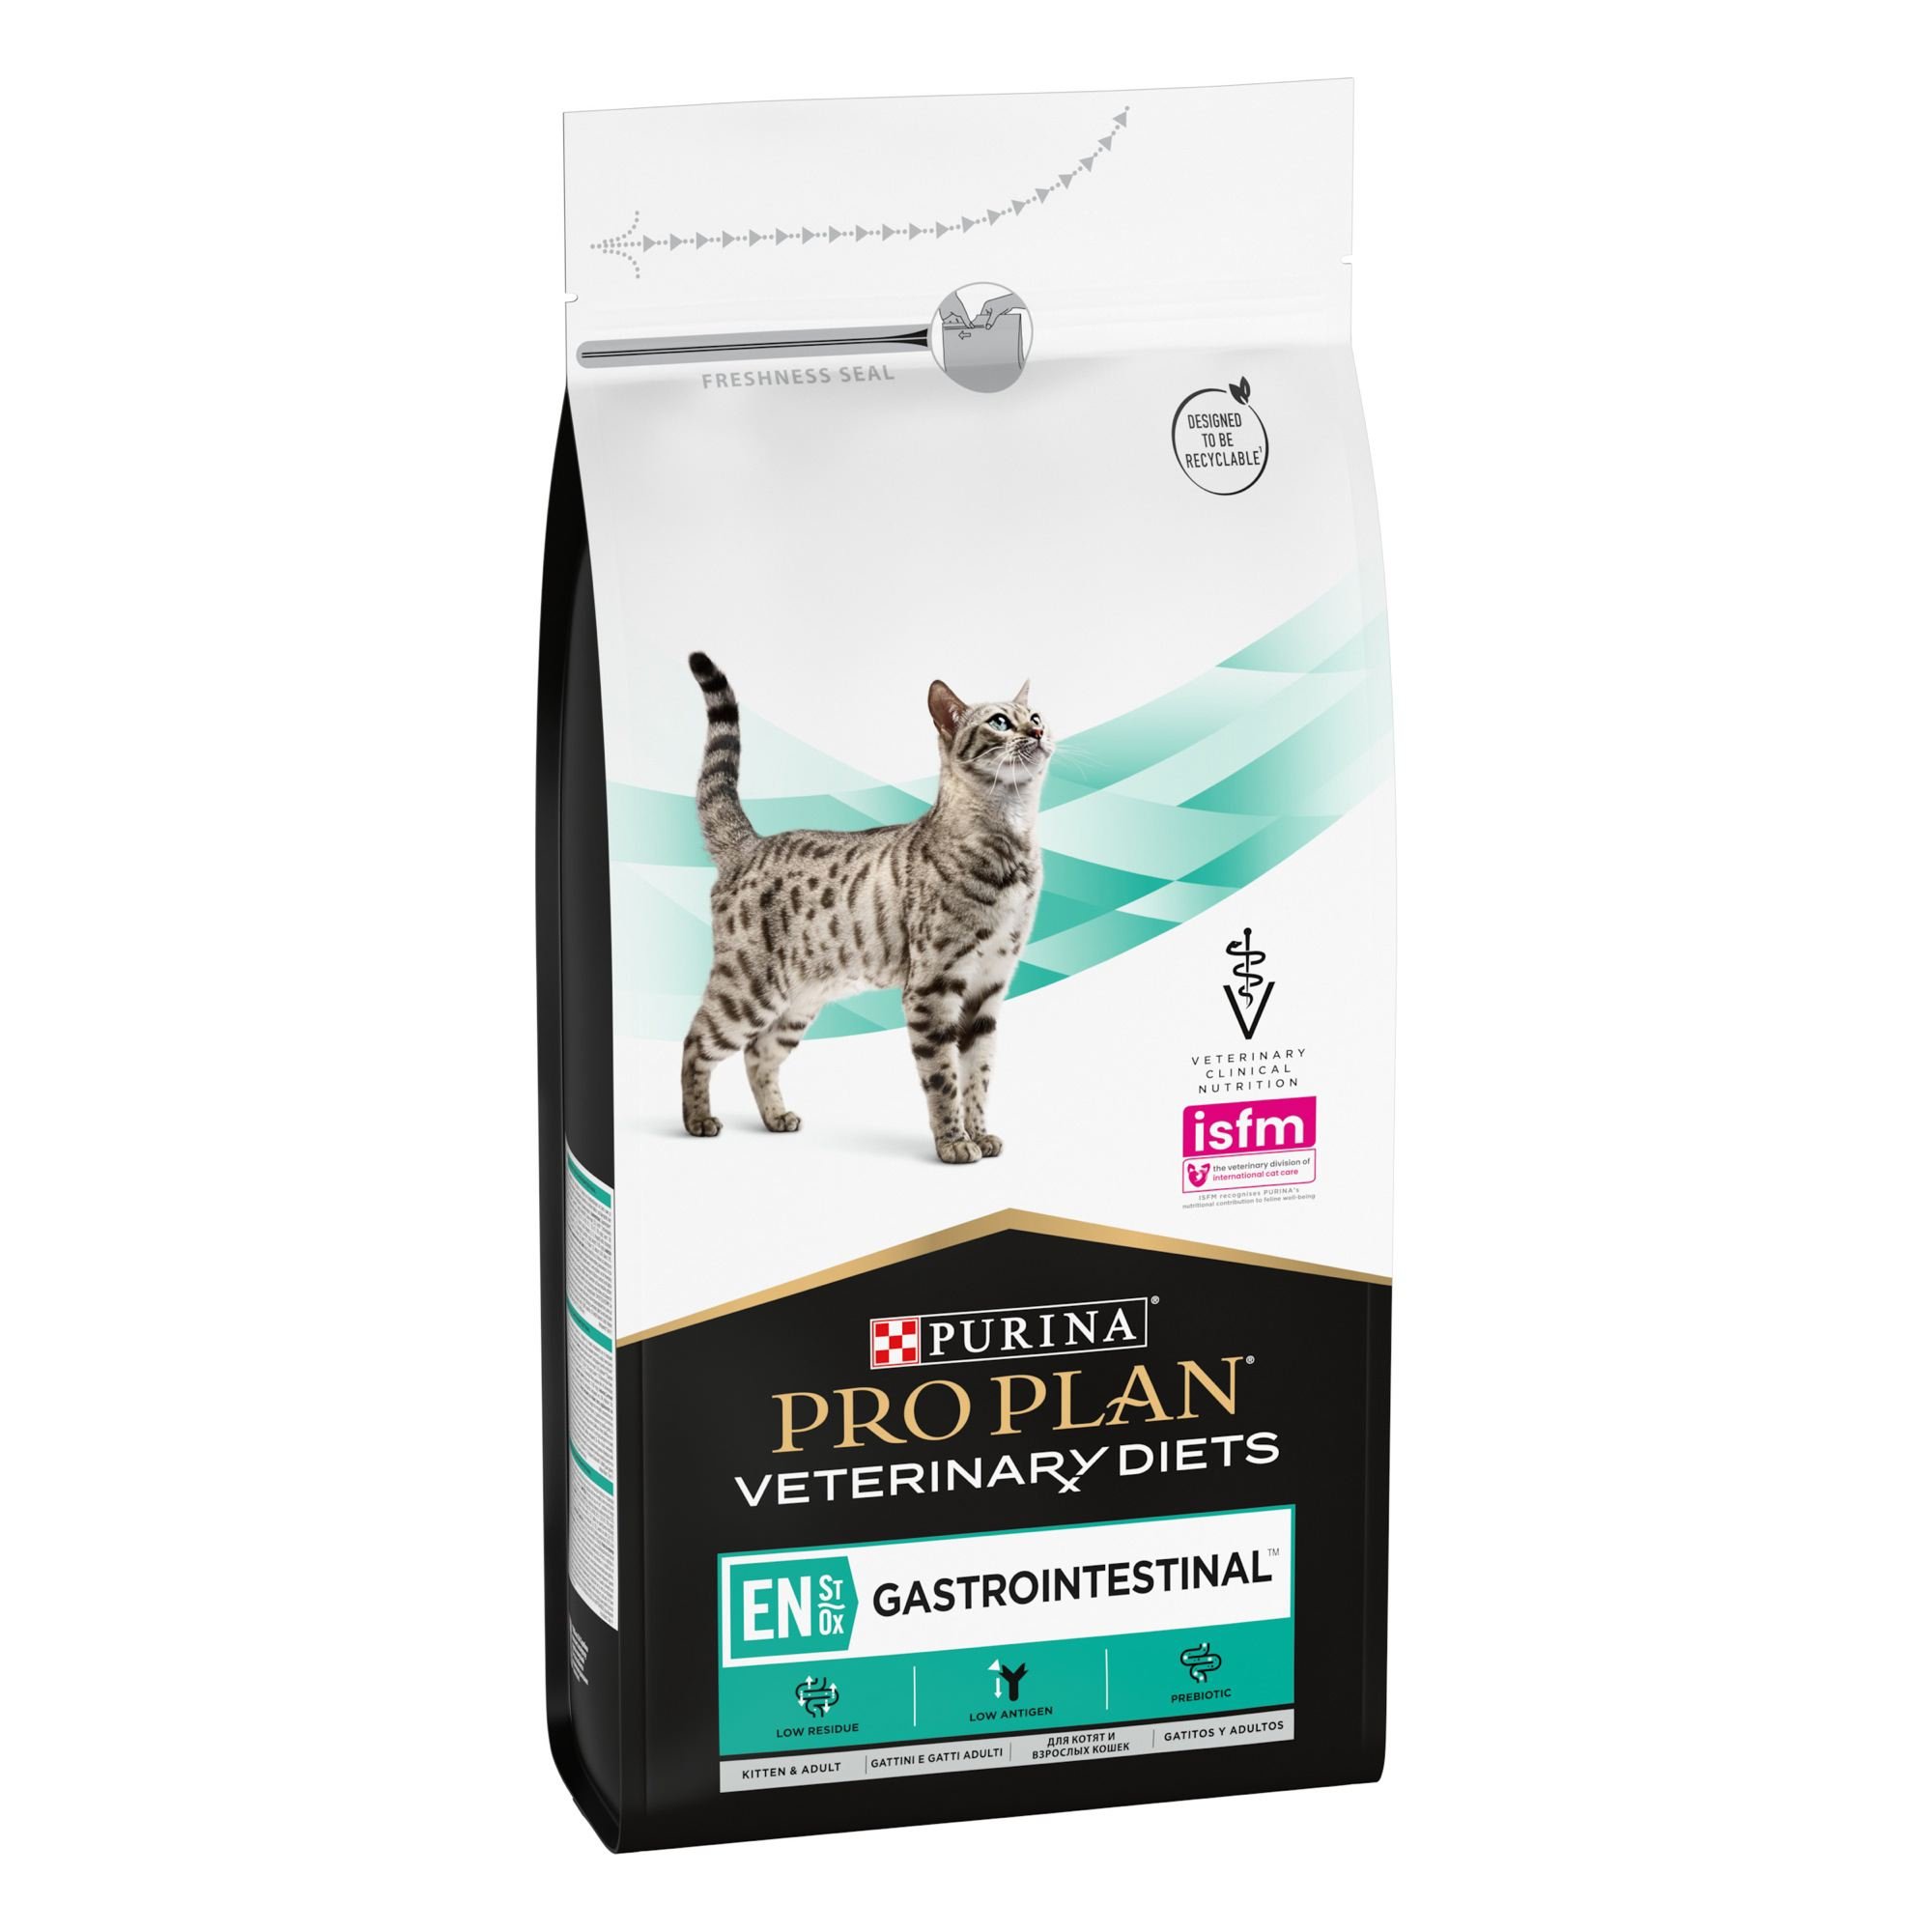 Сухой корм для кошек при заболеваниях желудочно-кишечного тракта Purina Pro Plan Veterinary Diets EN Gastrointestinal, 1,5 кг (12382848) - фото 2